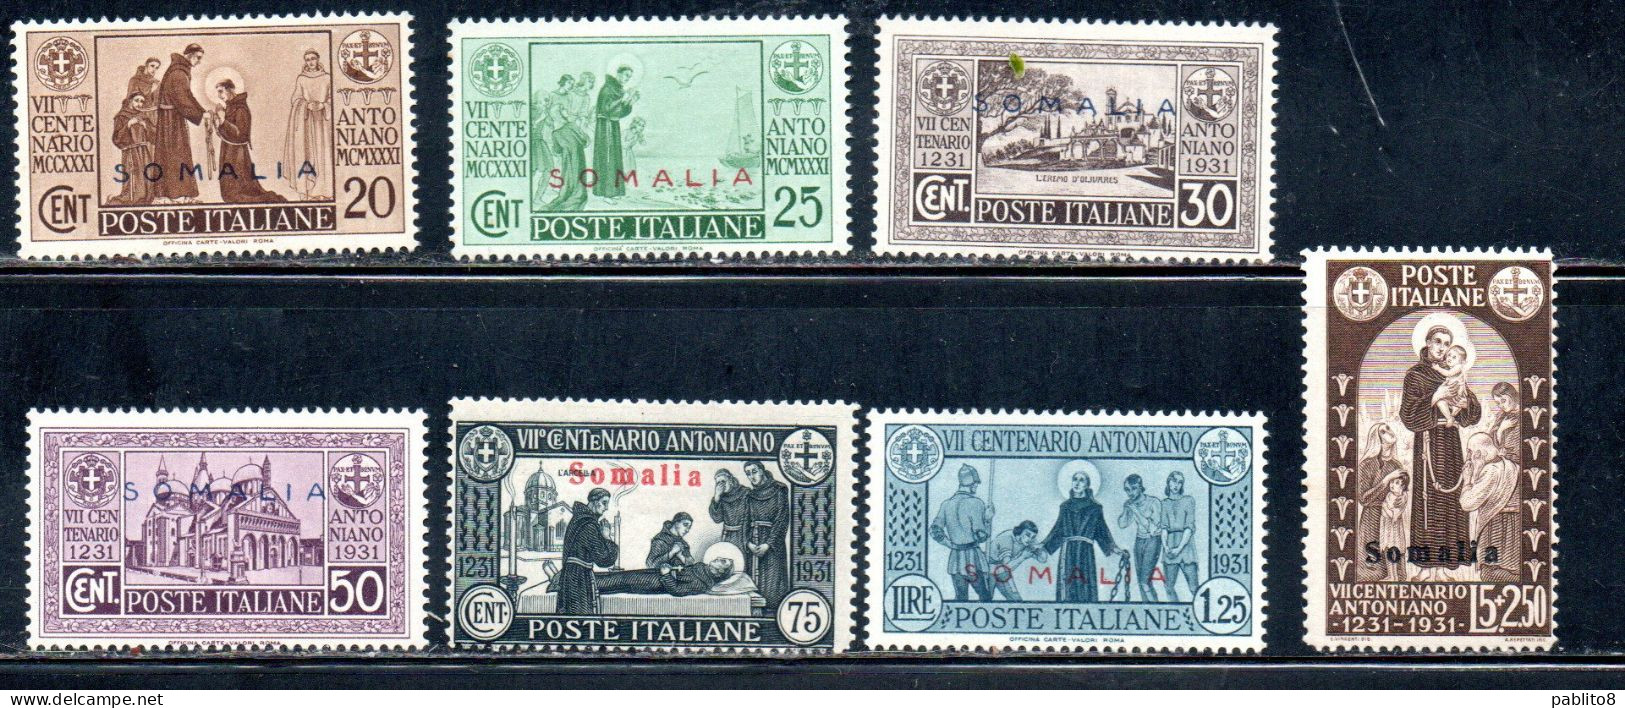 COLONIE ITALIANE SOMALIA 1931 S. SANT'ANTONIO SERIE COMPLETA COMPLETE SET MNH - Somalia